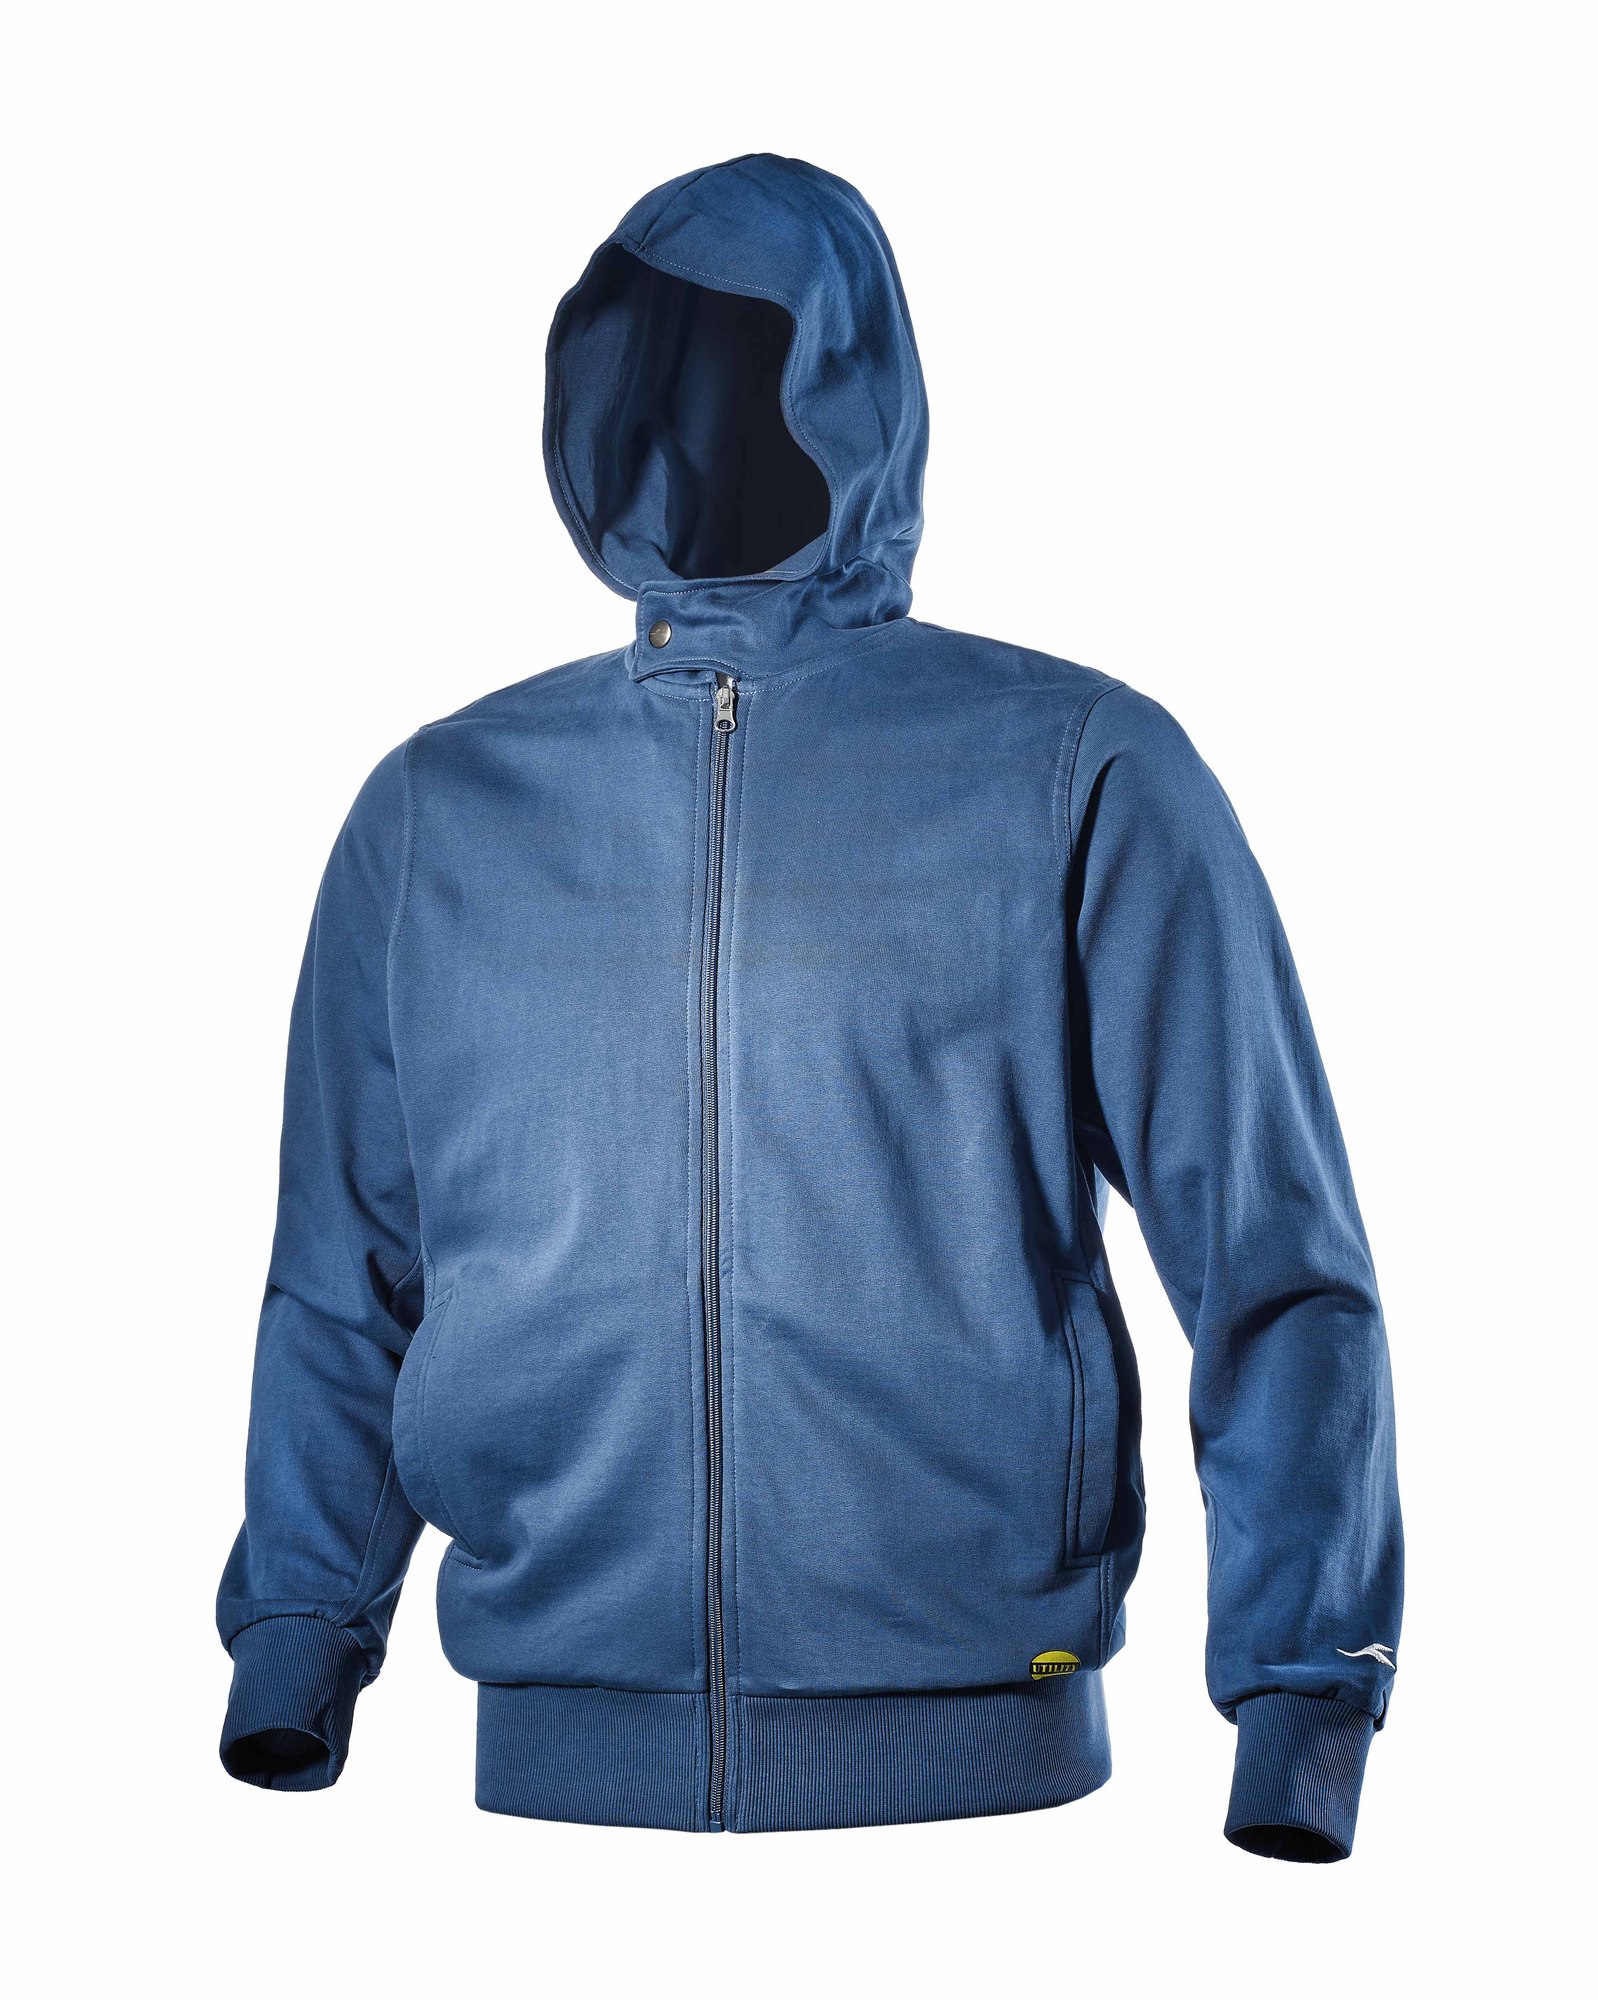 Sweatshirt THUNDER bleu roi TXL - DIADORA SPA - 702.157767.XL 60030